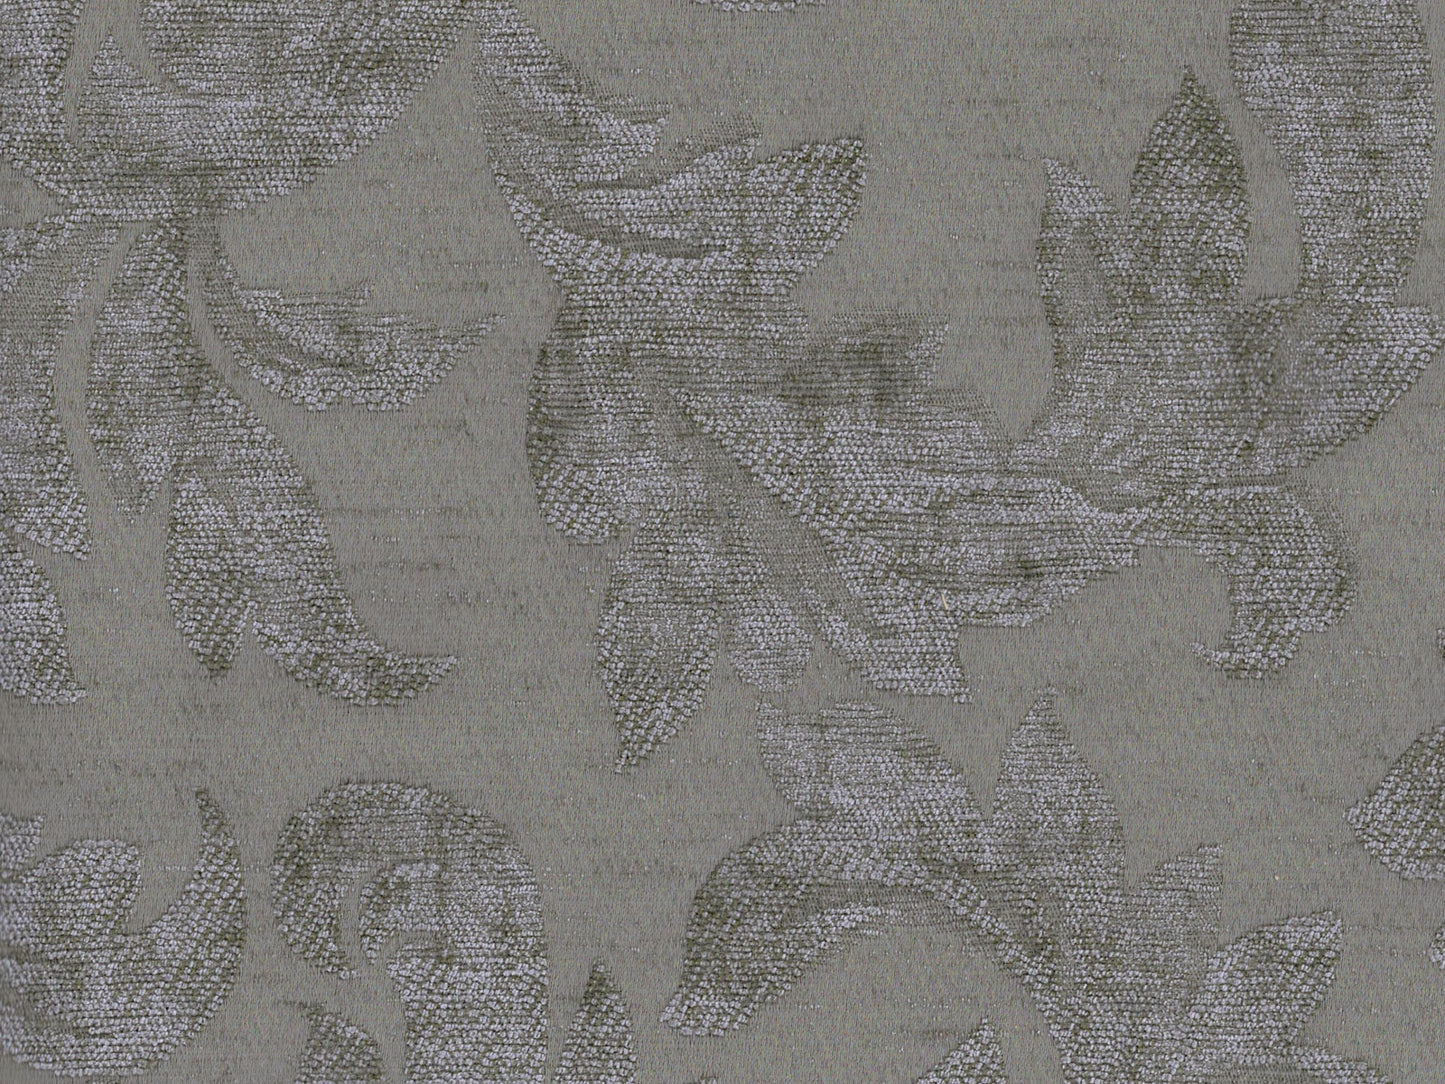 Fortuna Fabric Samples - Rydan Interiors